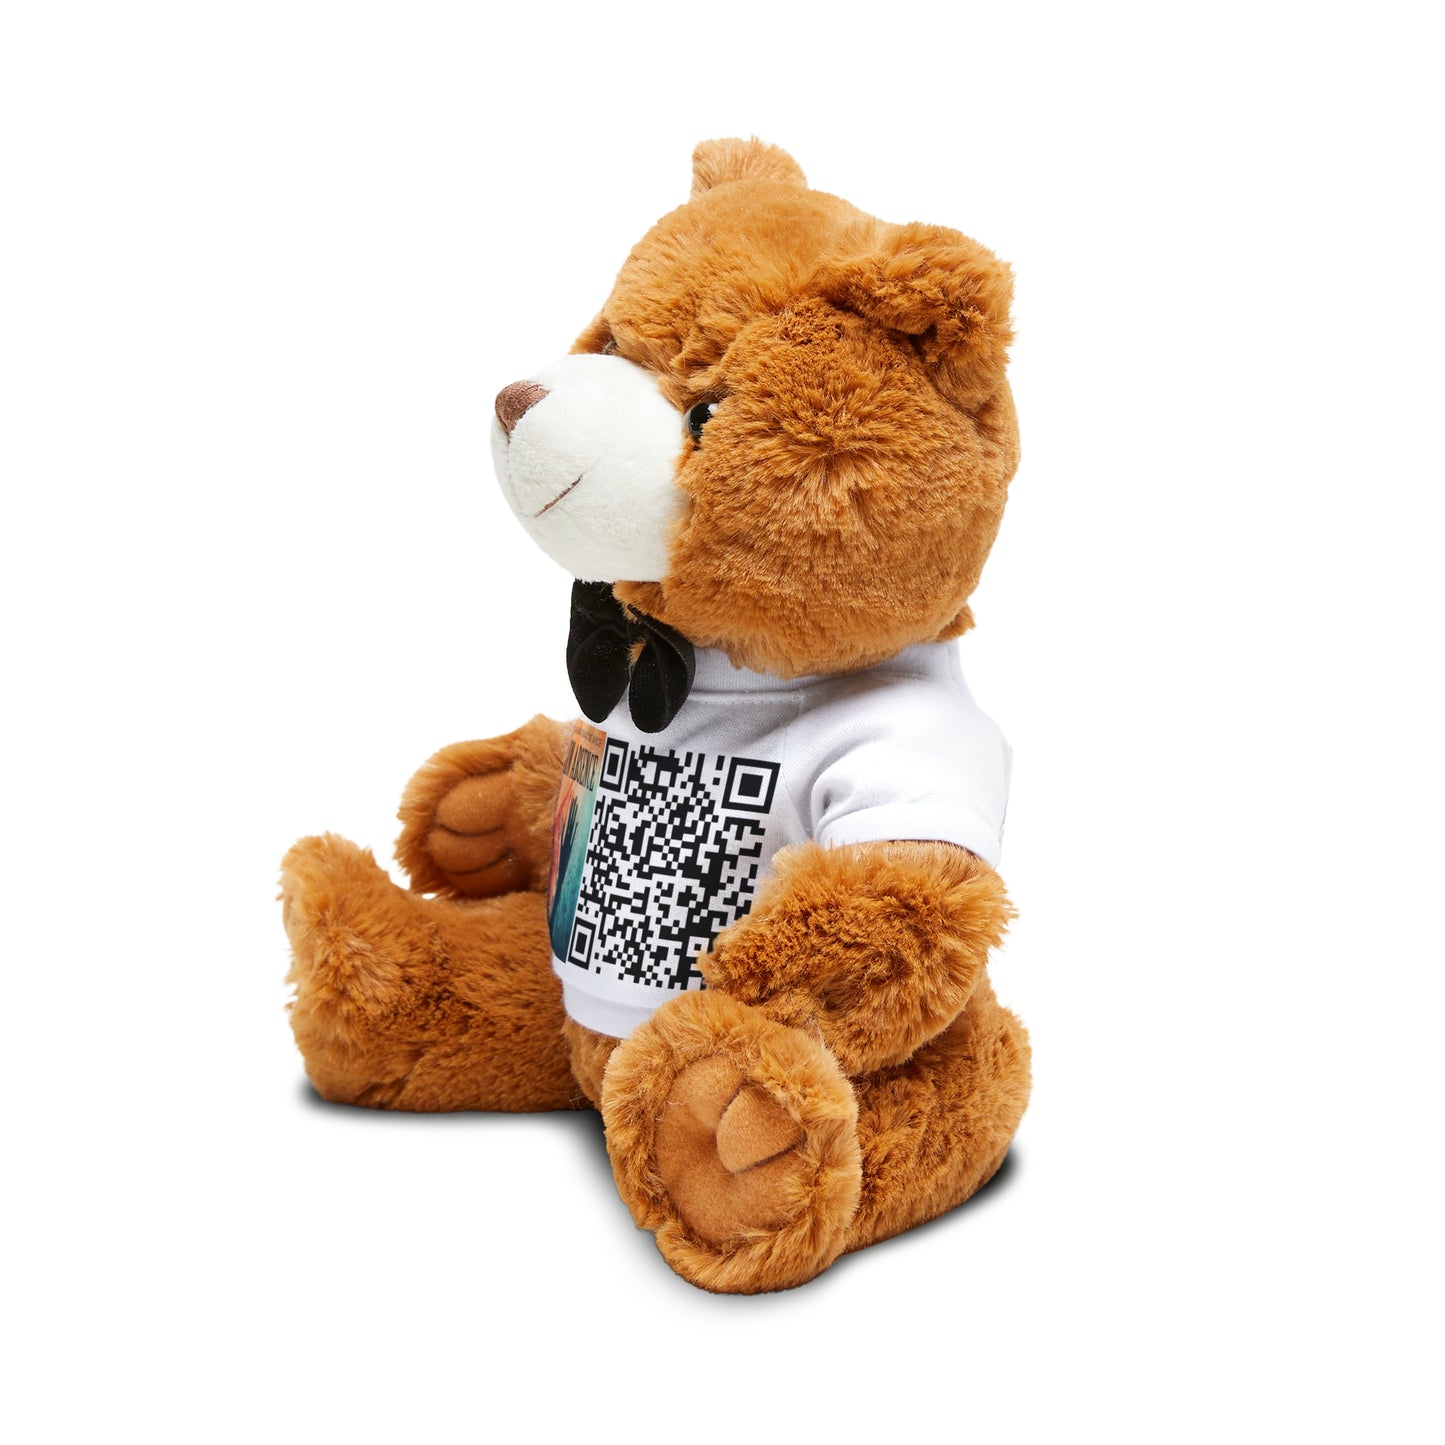 In Absence - Teddy Bear